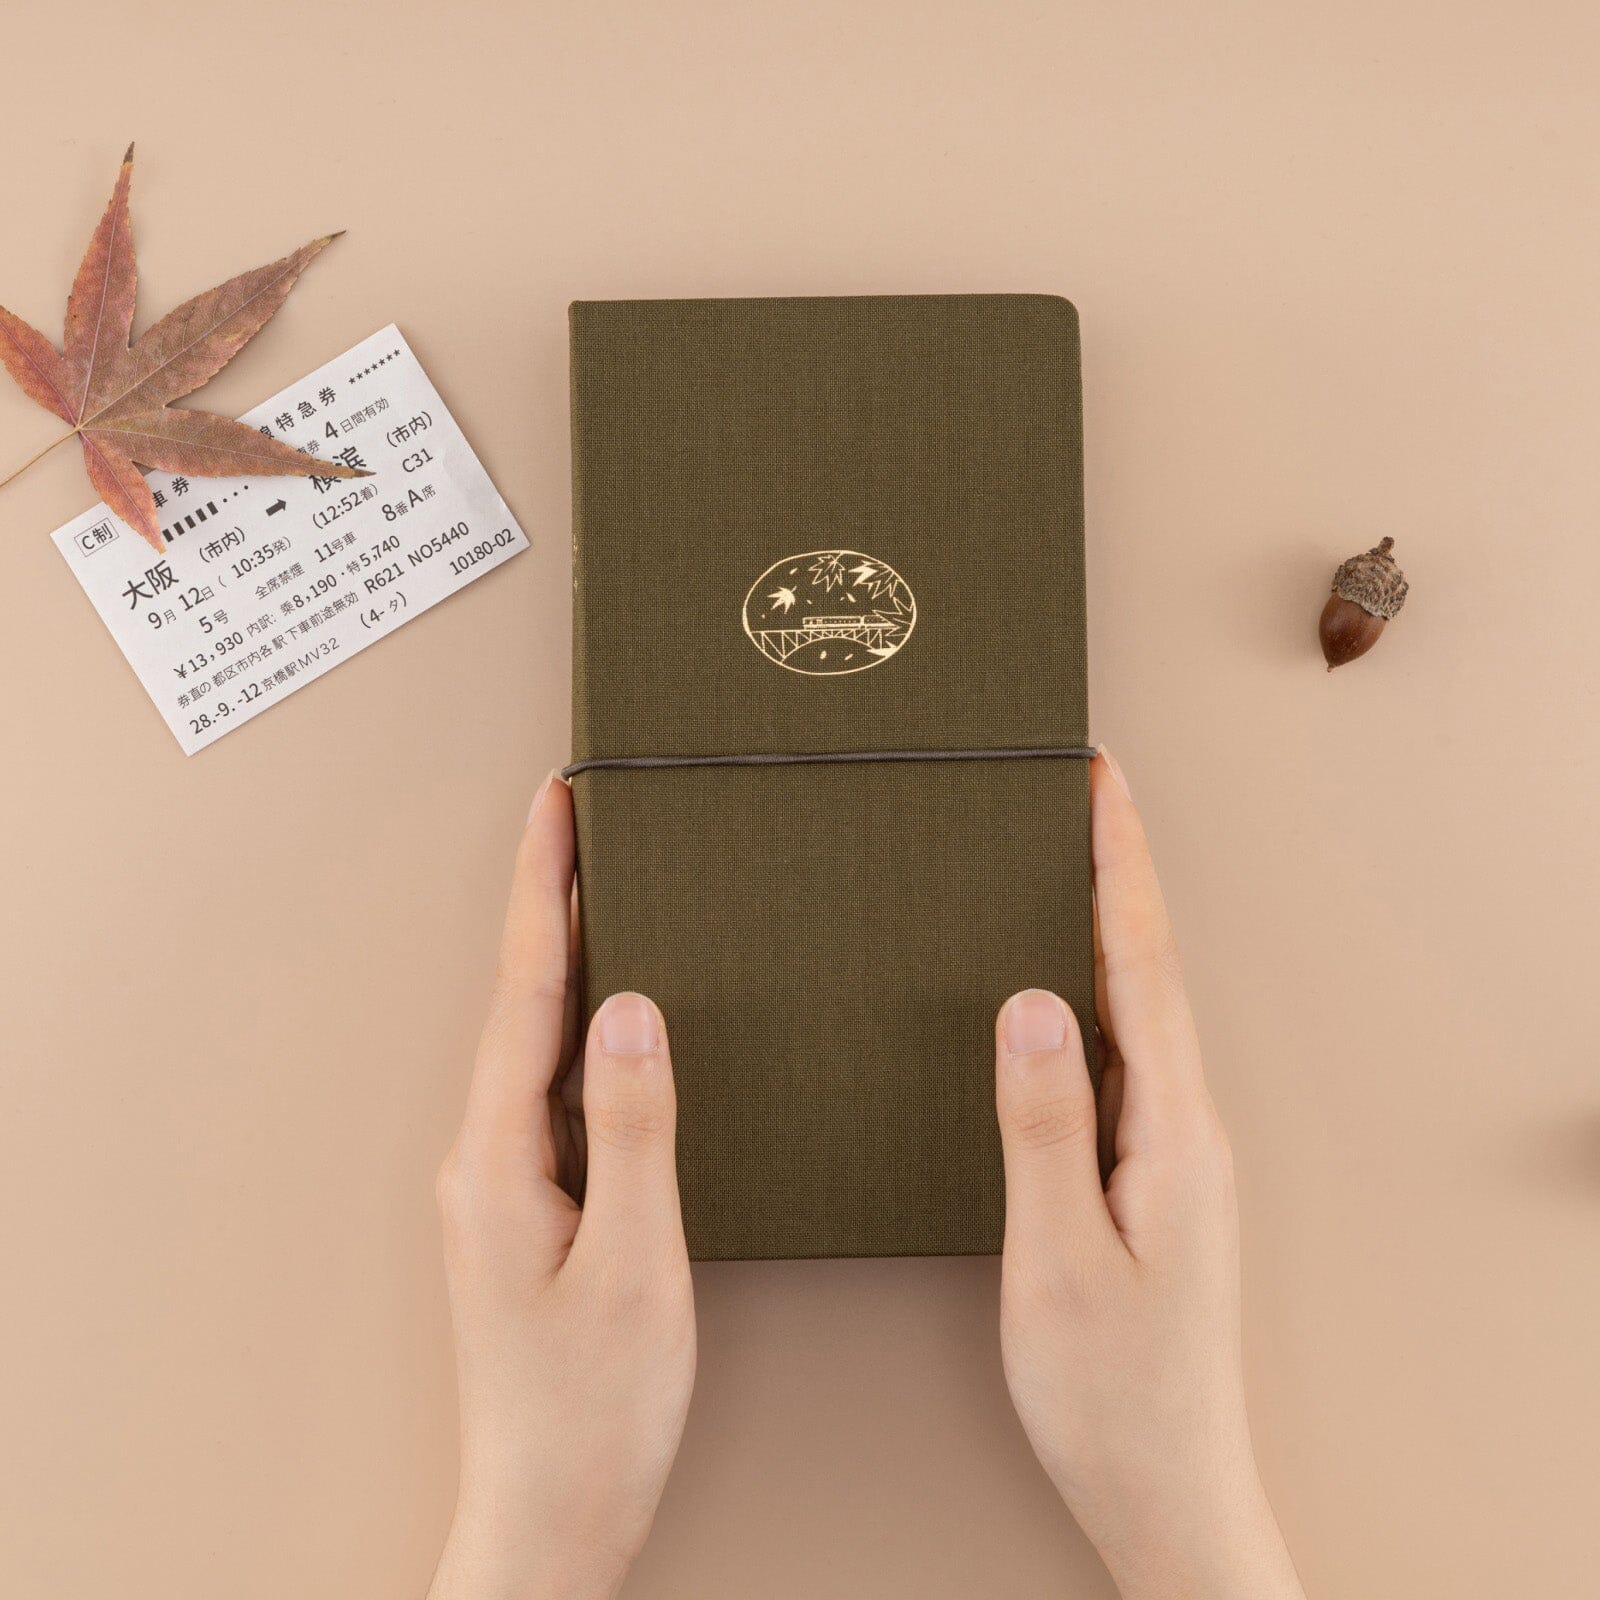 Tsuki ‘Maple Journey’ Travel Notebook ☾